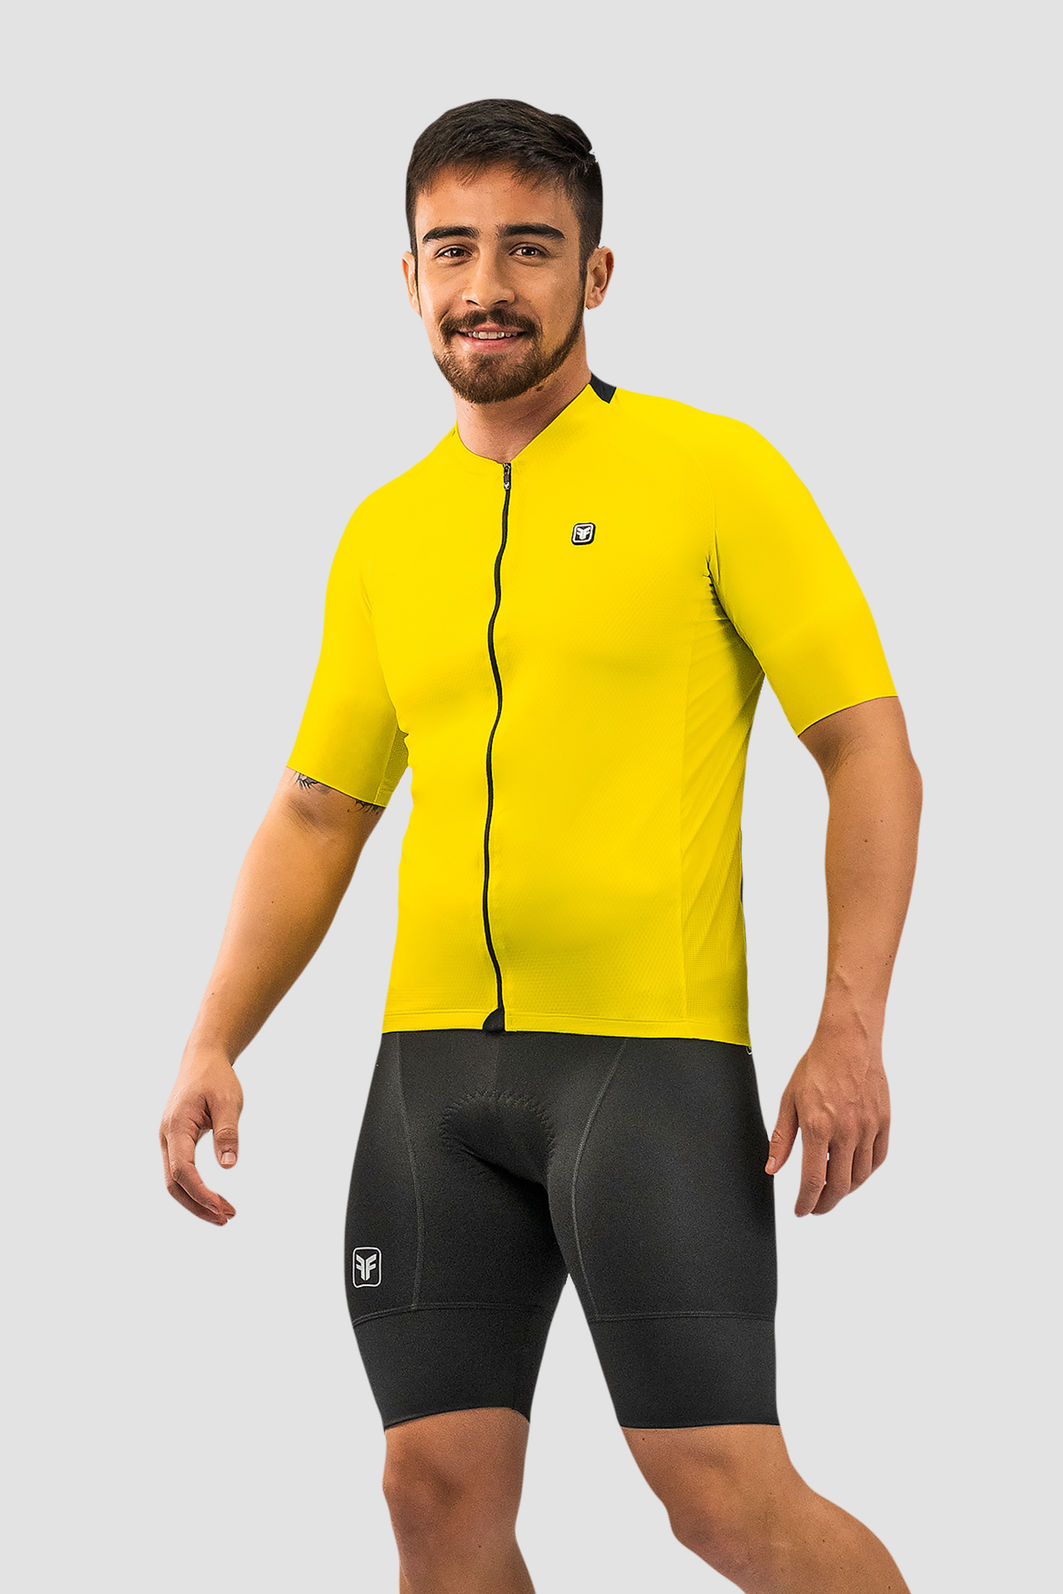 Camisa Freeforce Masculina Start All Fit Preta Comfort Ciclismo - Free  Force - Camisa de Ciclismo - Magazine Luiza